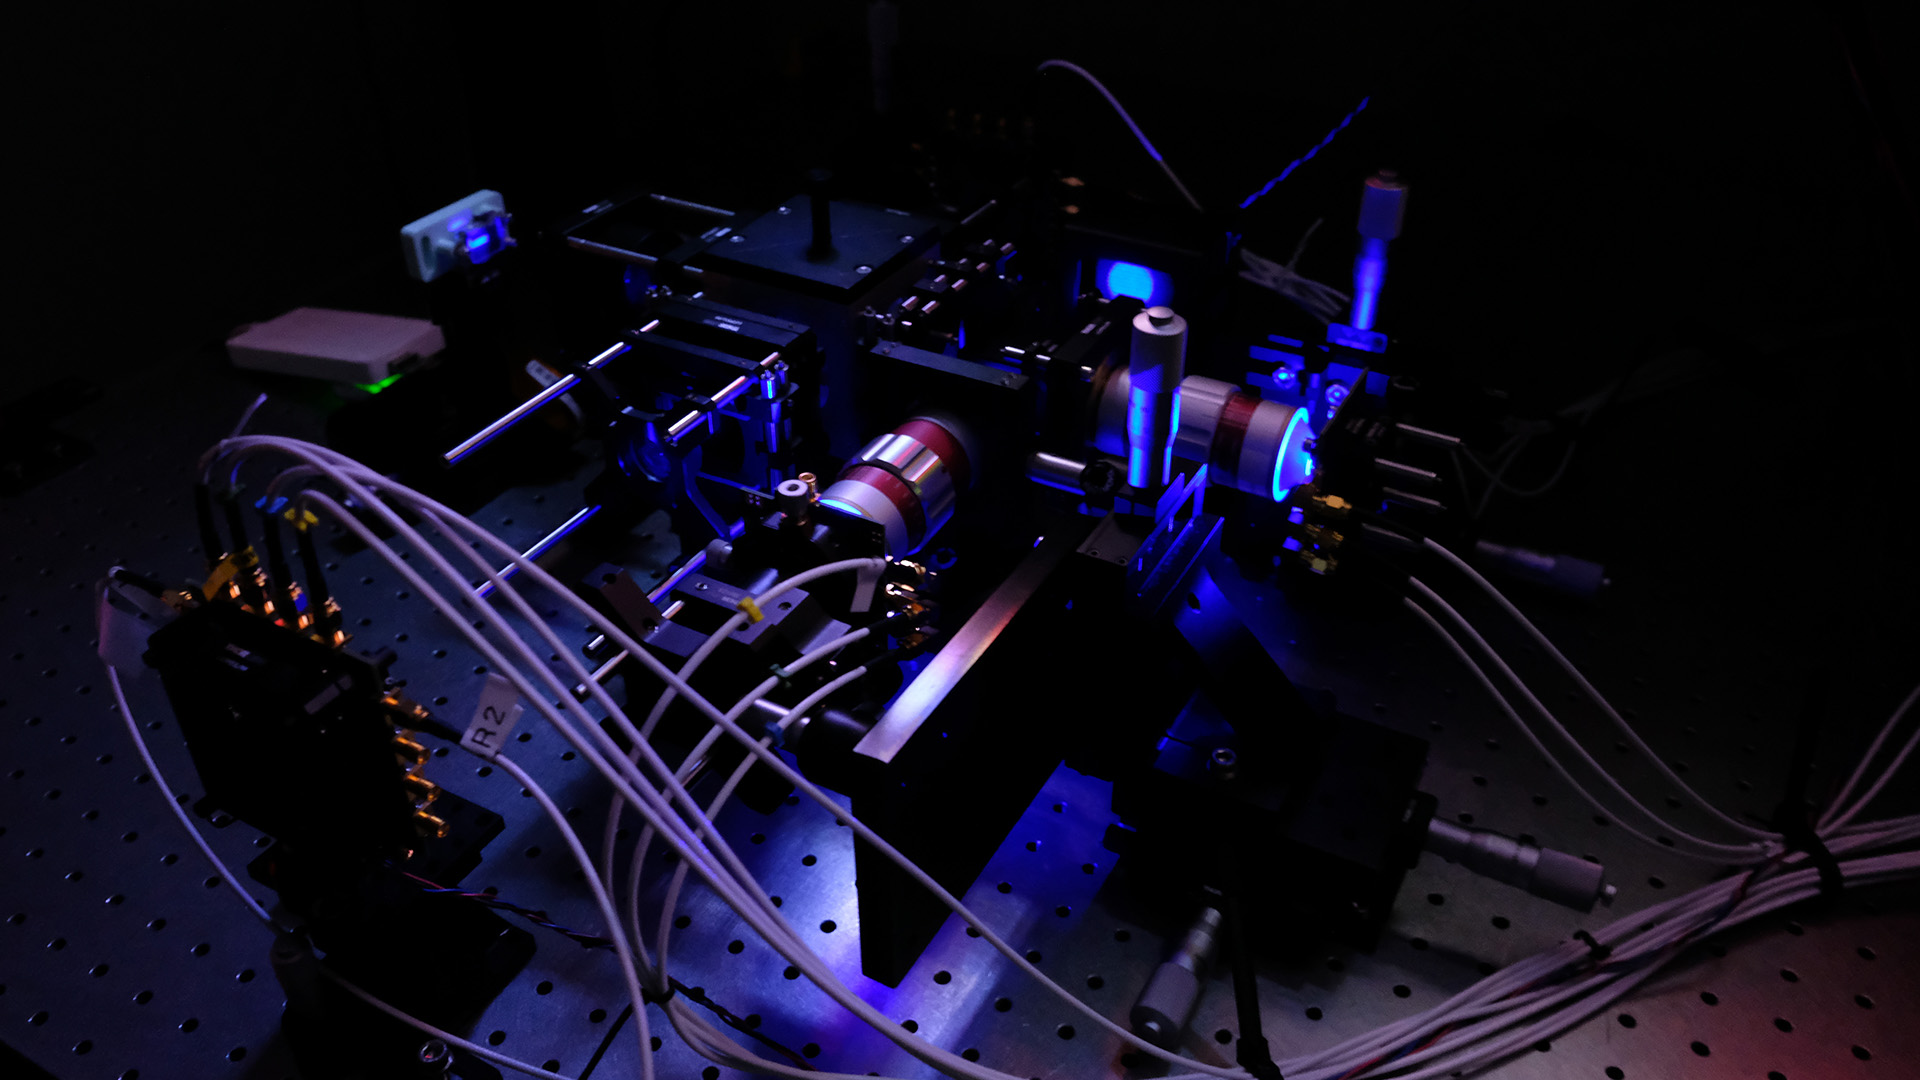 The optical equipment in the Analog Iterative Machine